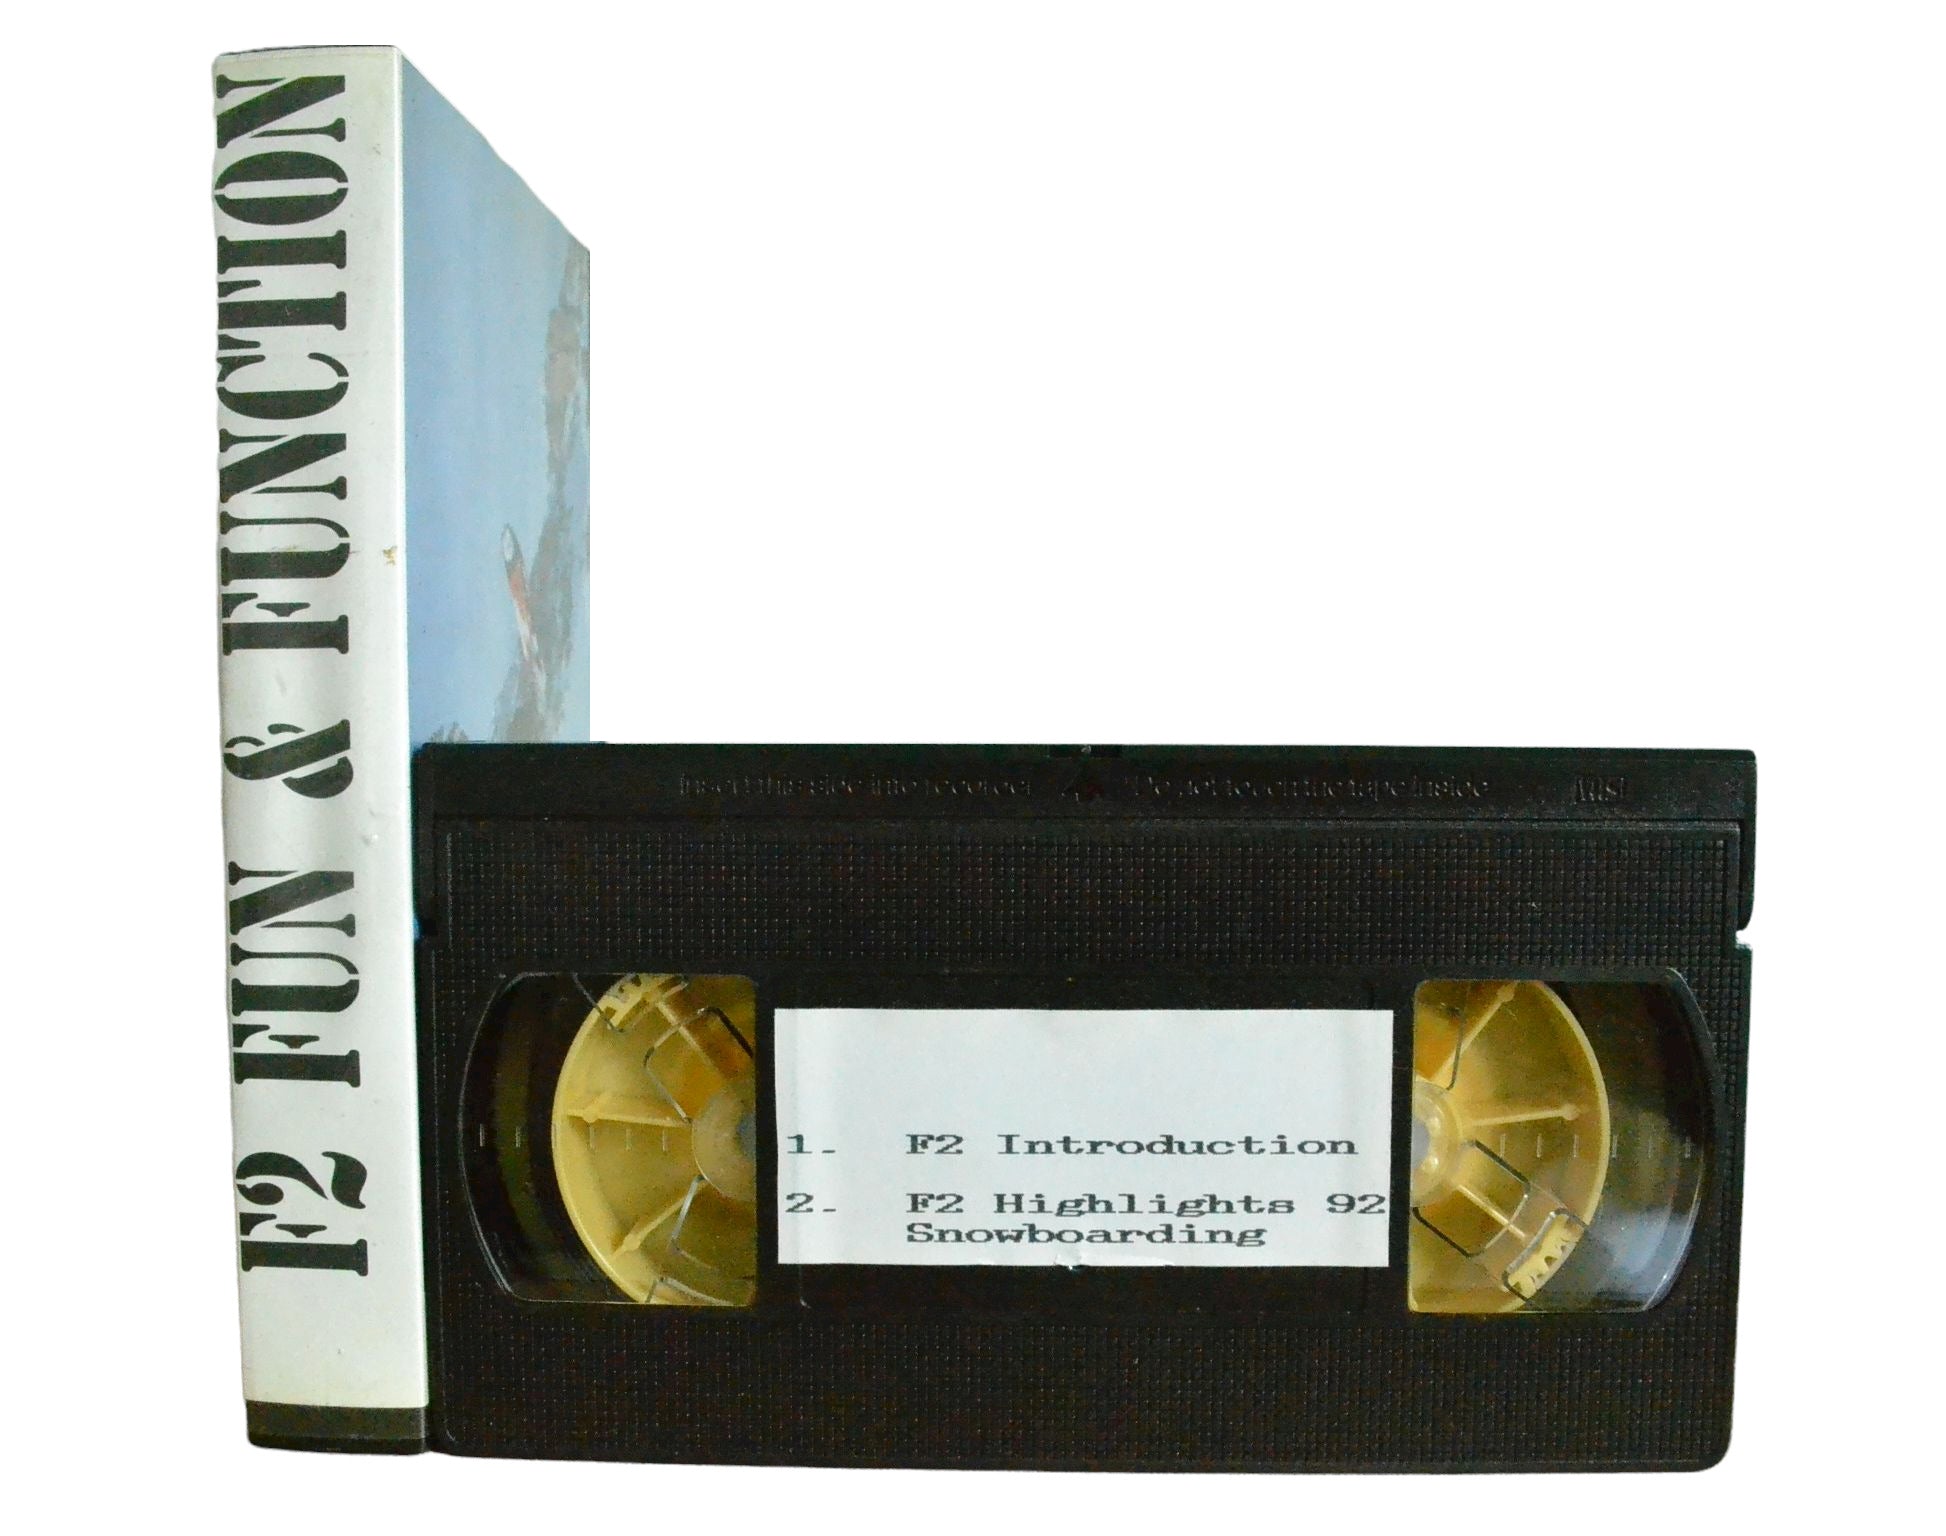 One summer VHS